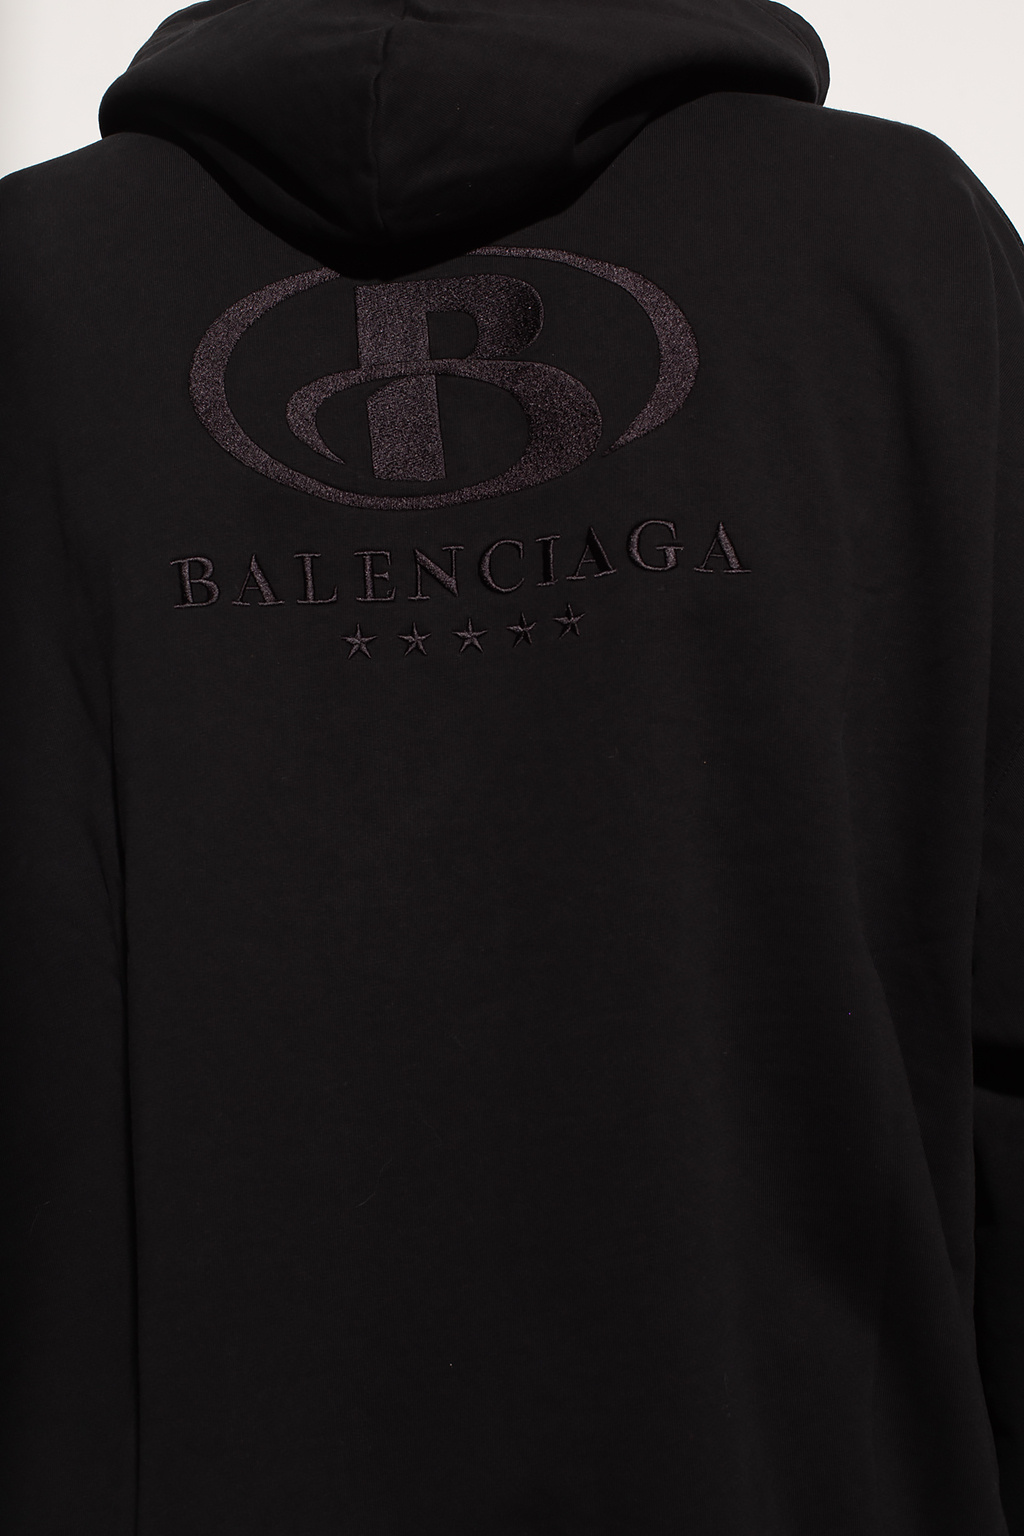 Balenciaga Autograph Black Shirts